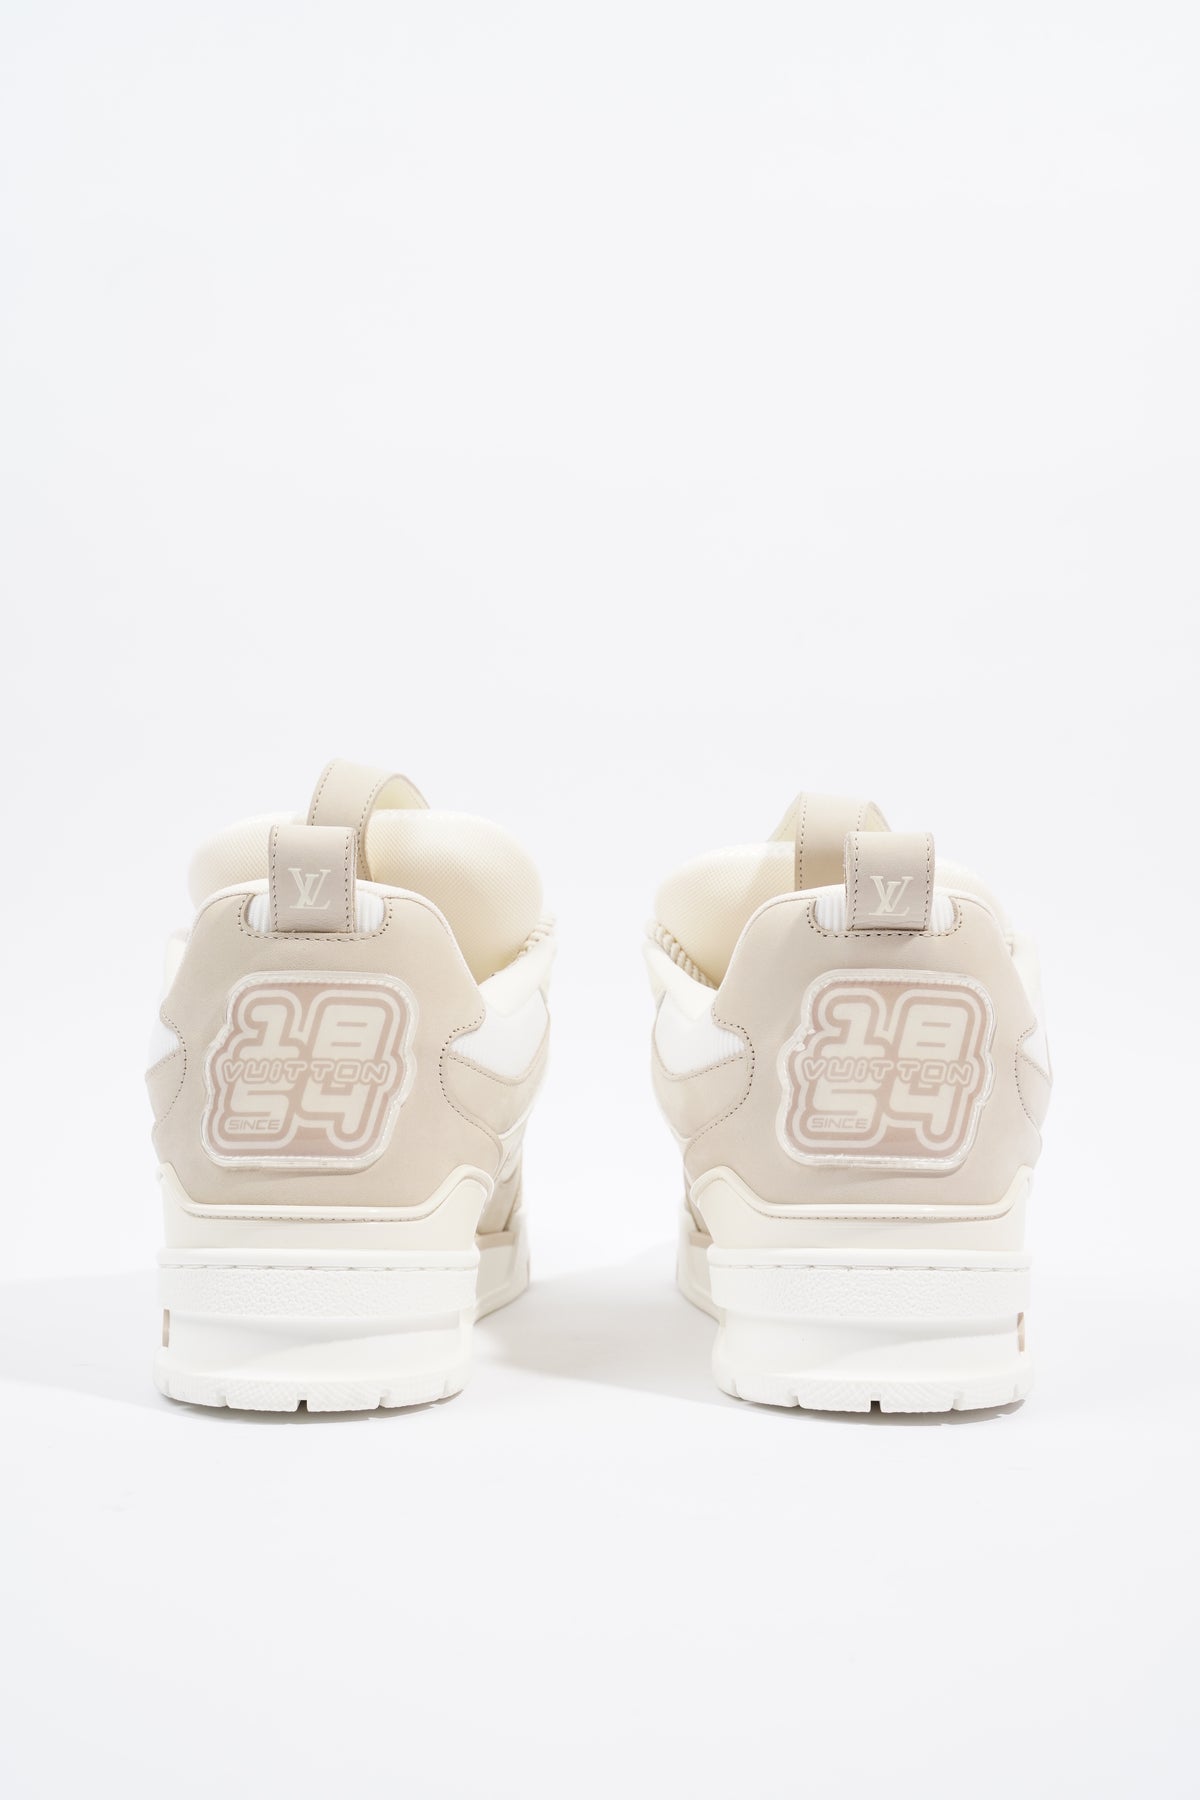 Louis Vuitton LV Skate Trainers Sneakers 'Beige White', UK 12 | EU 47.5 | US 13